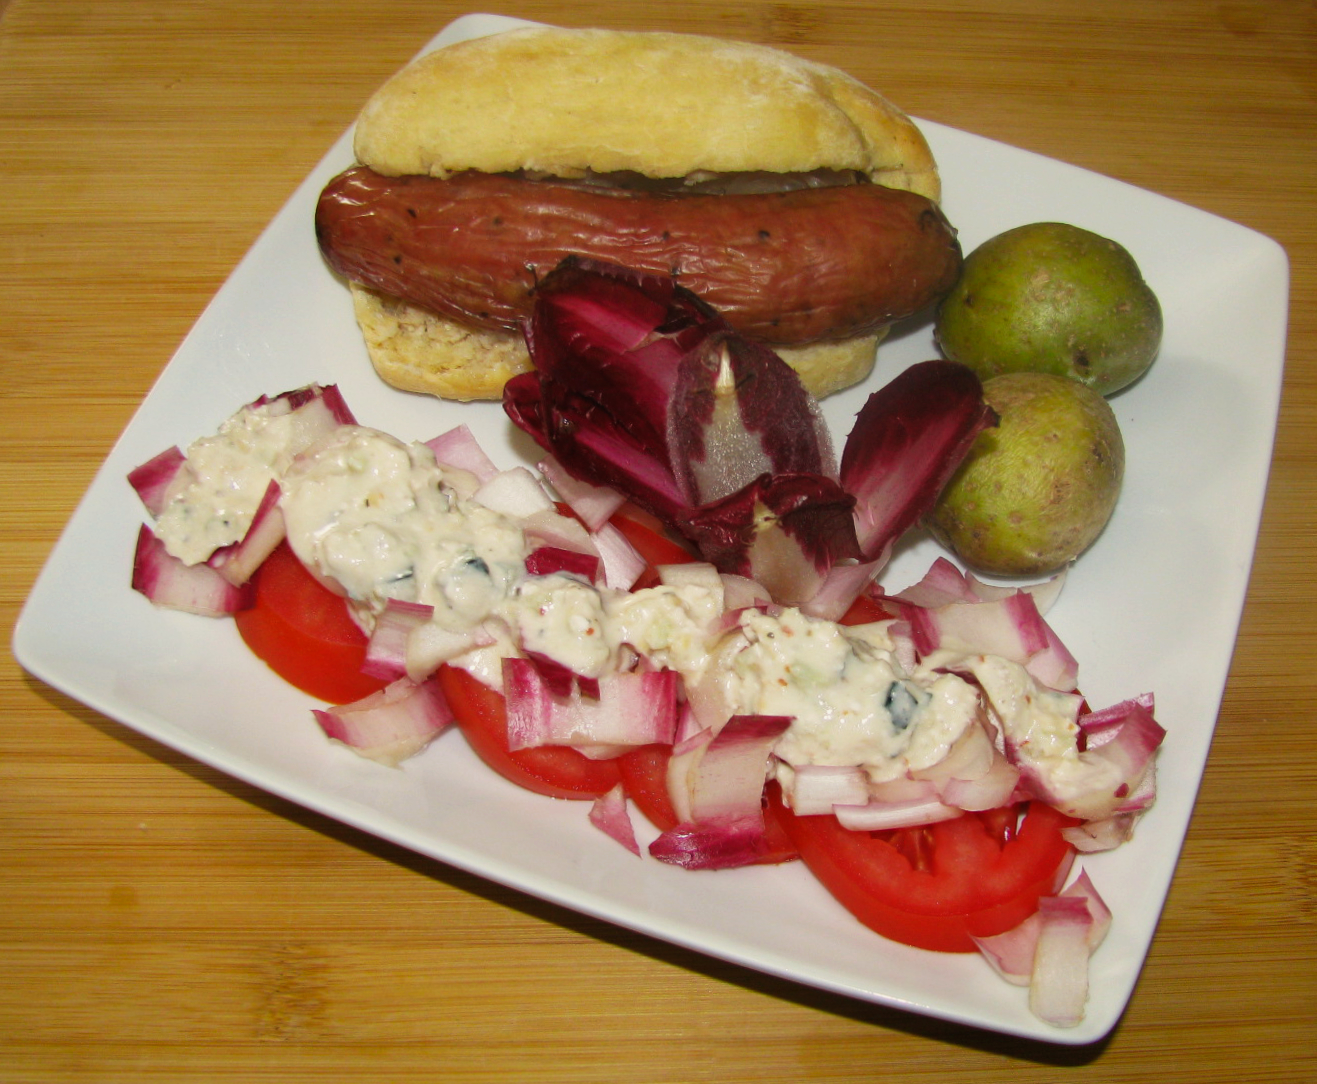 Bratwurst Sandwich with Potatoes and Endive Tomato Salad